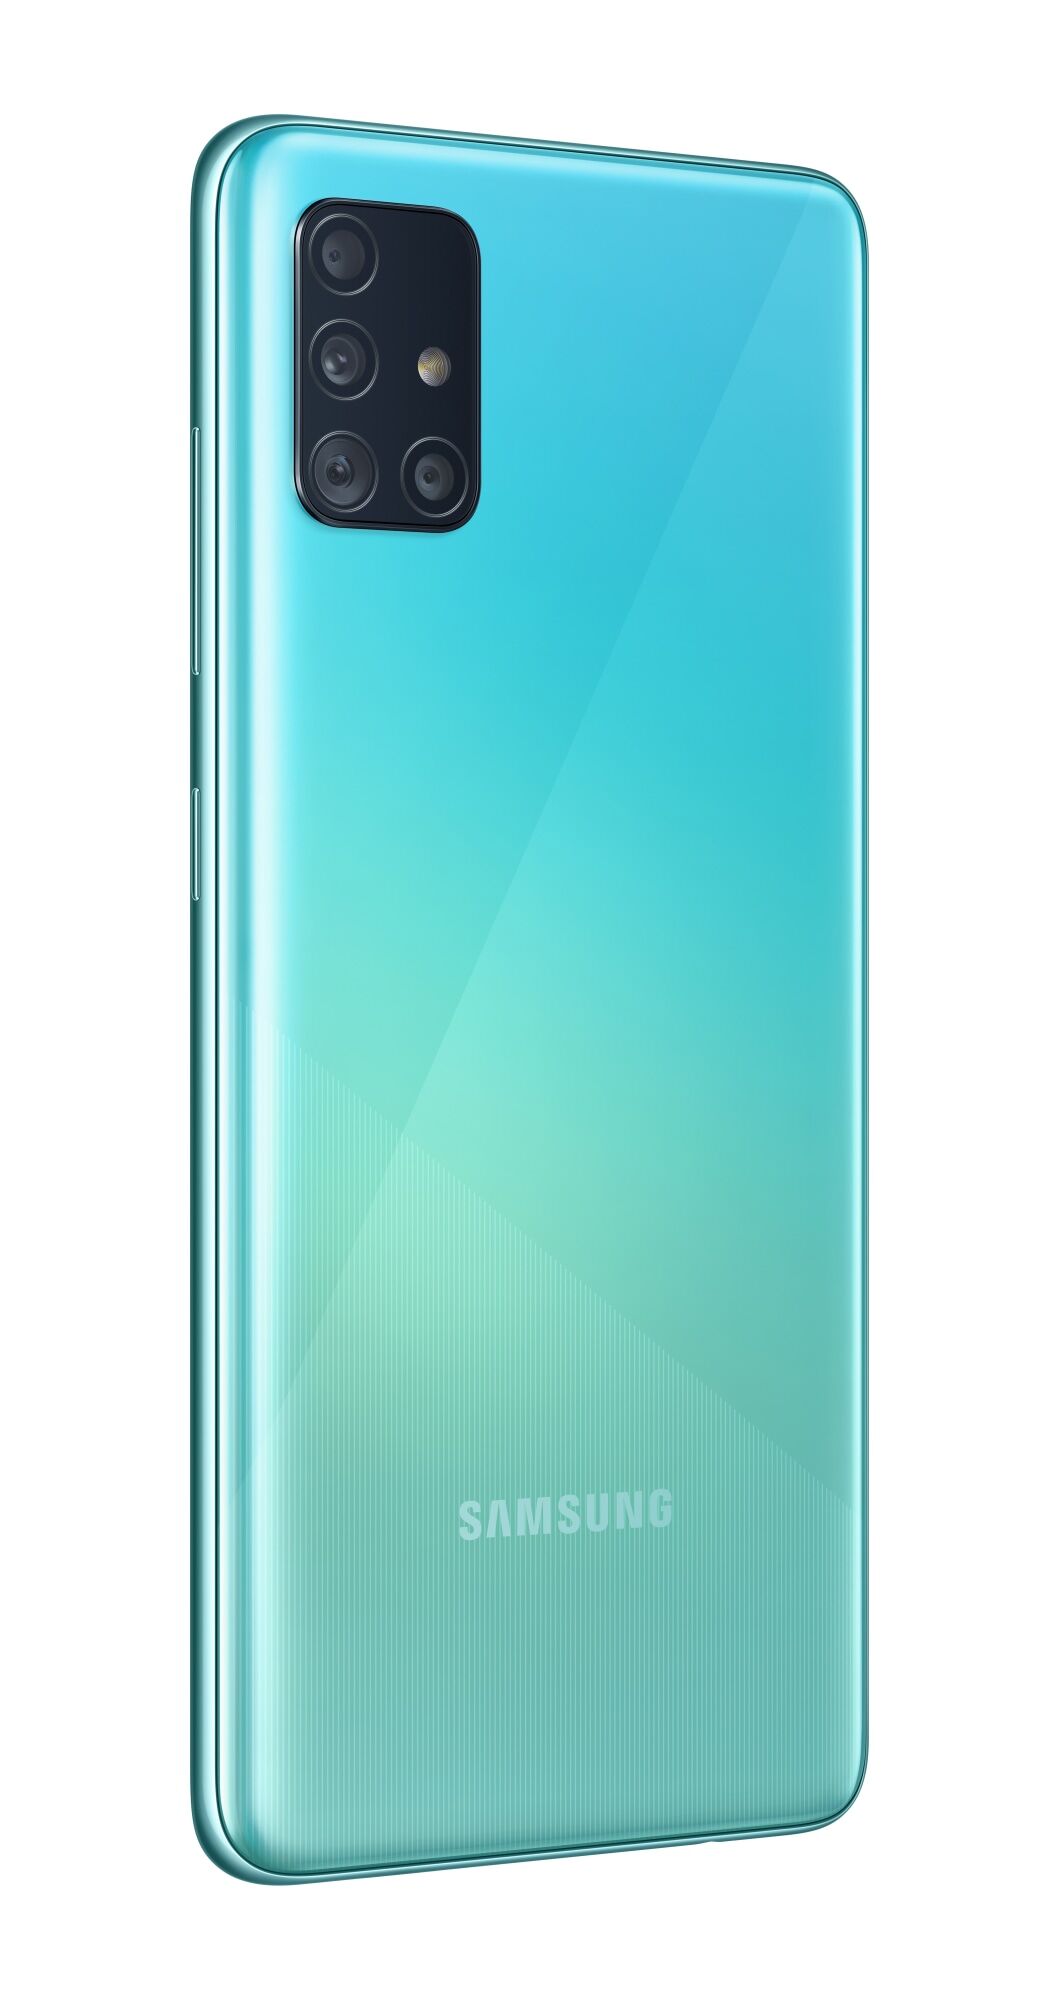 Samsung Galaxy A51 128 GB älypuhelin